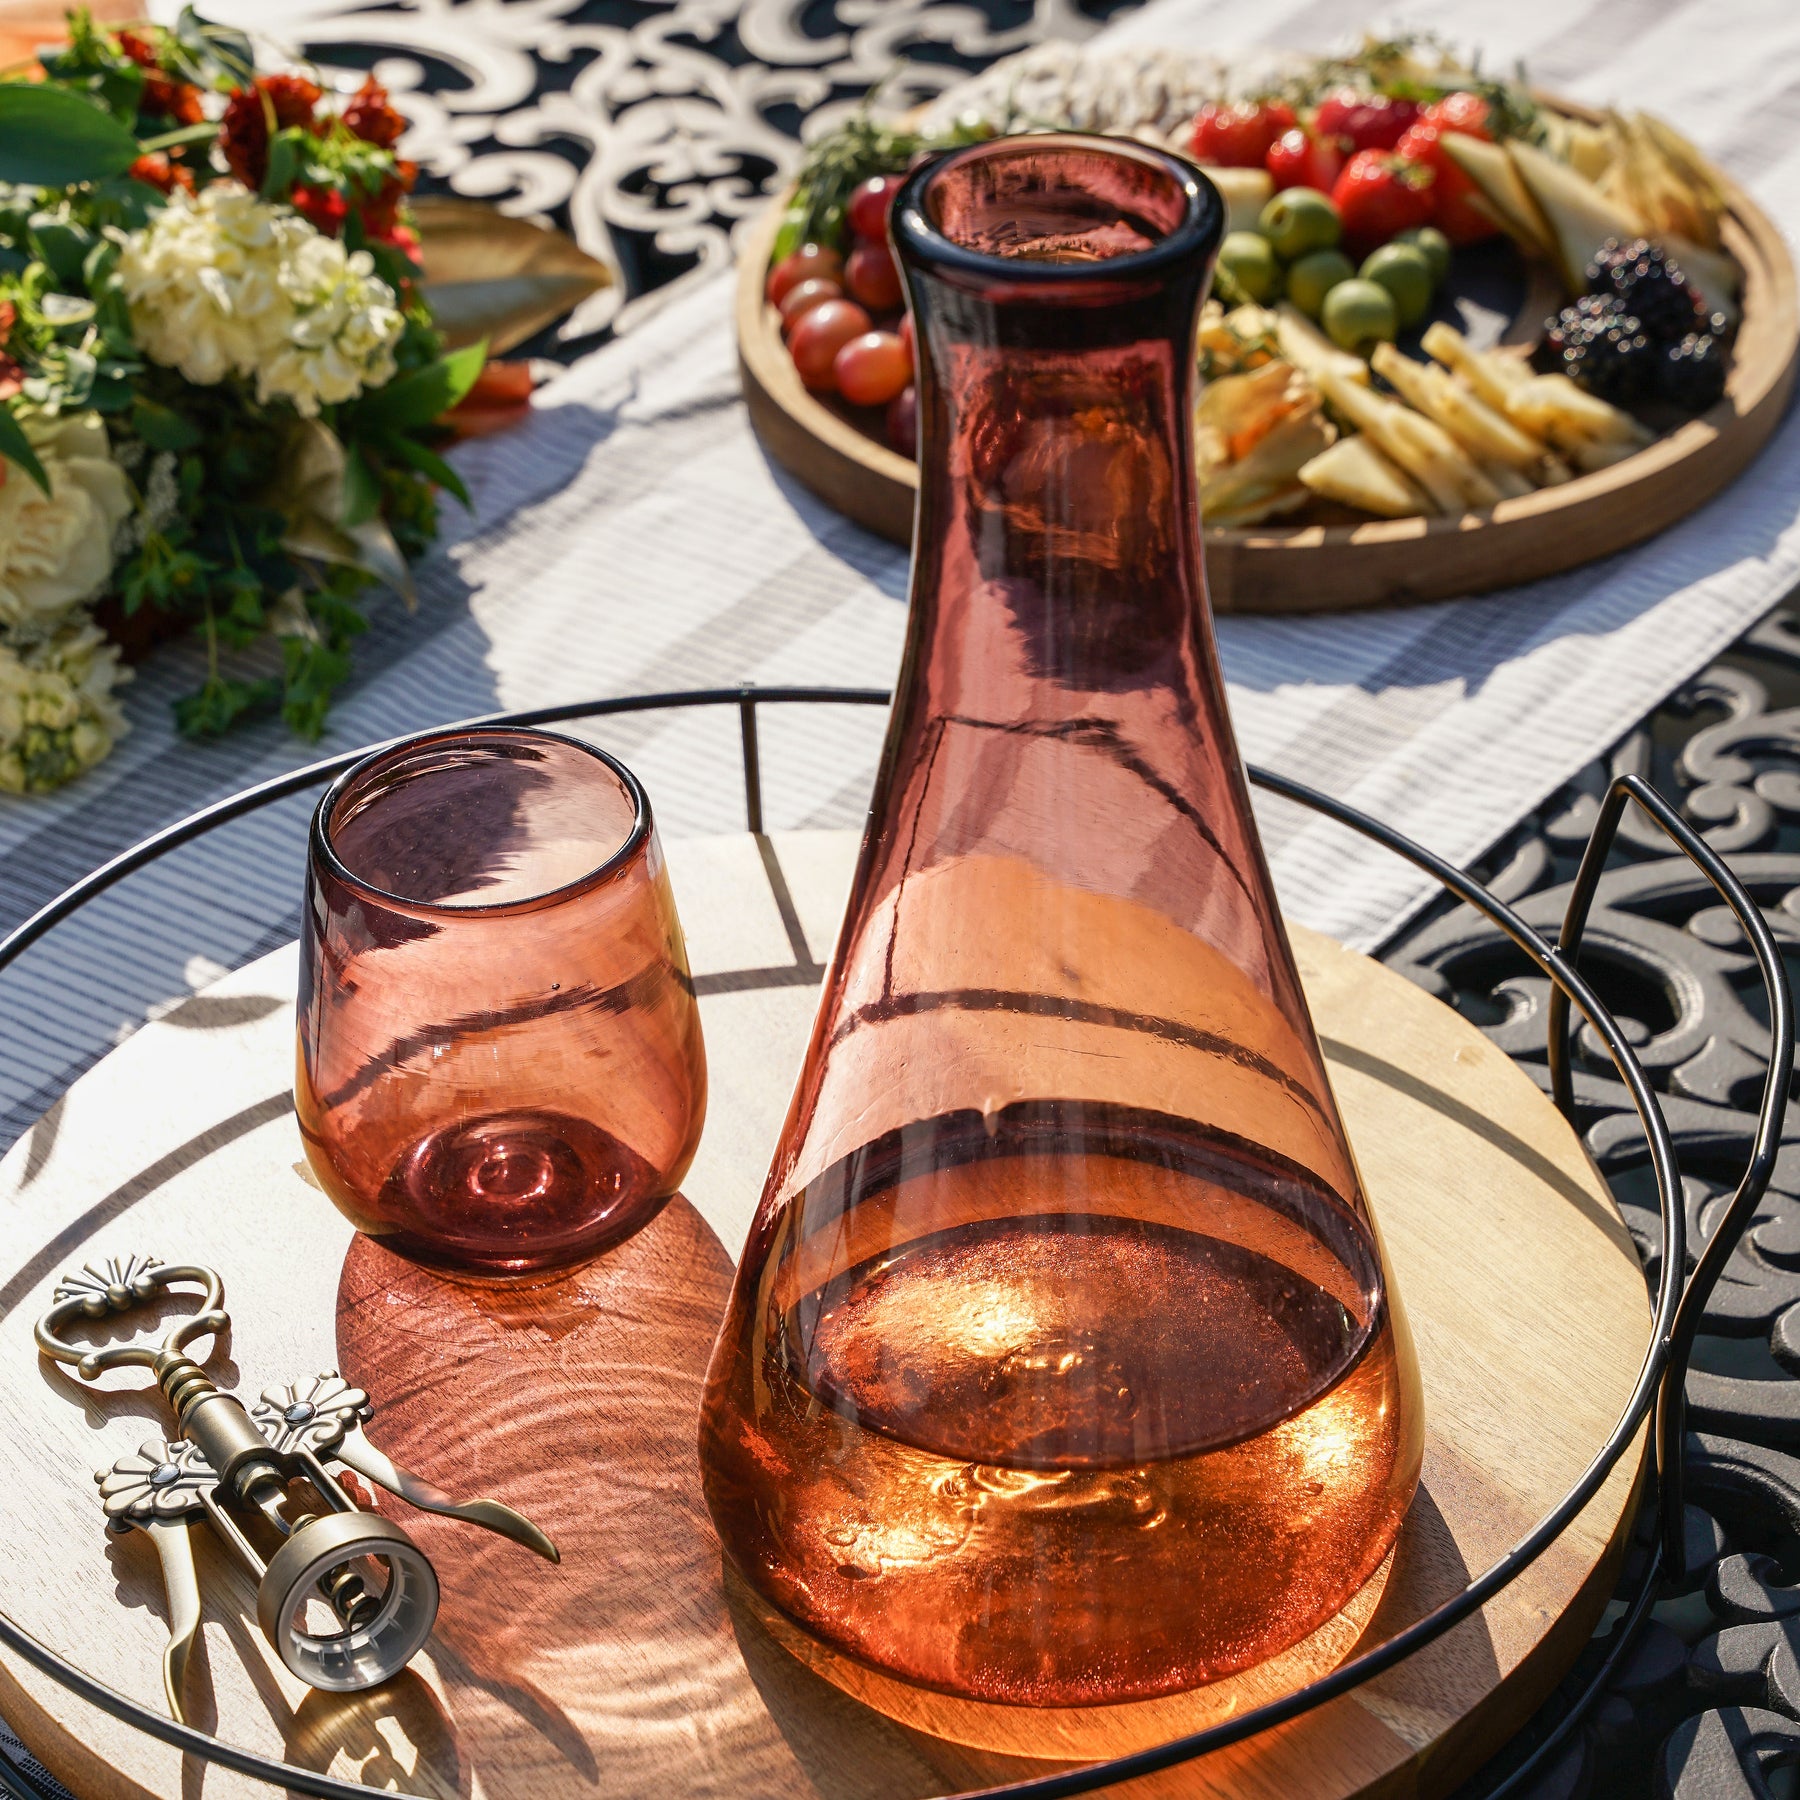 Segunda Vida Rosado Stemmed Wine Glasses - Hand Blown Red Wine Glass Set -  100% Recycled Glassware Made in Mexico 13oz Set of 2 – Twine Living